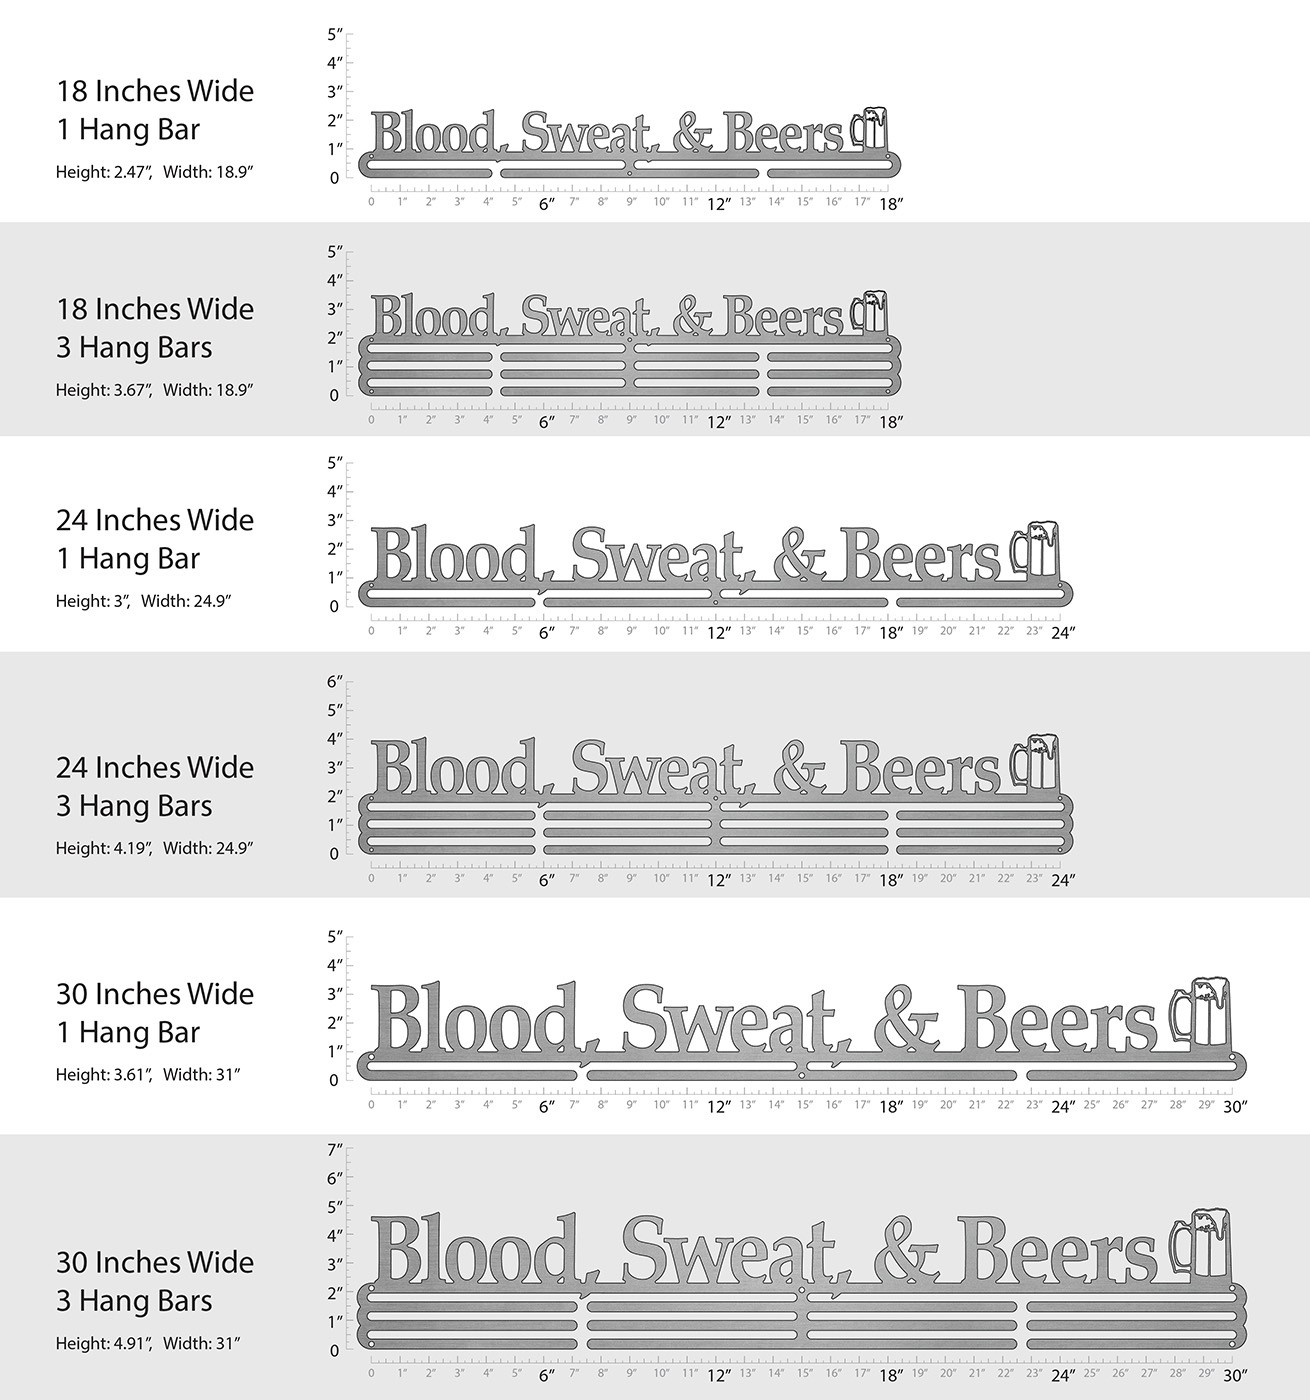 Blood, Sweat, & Beers